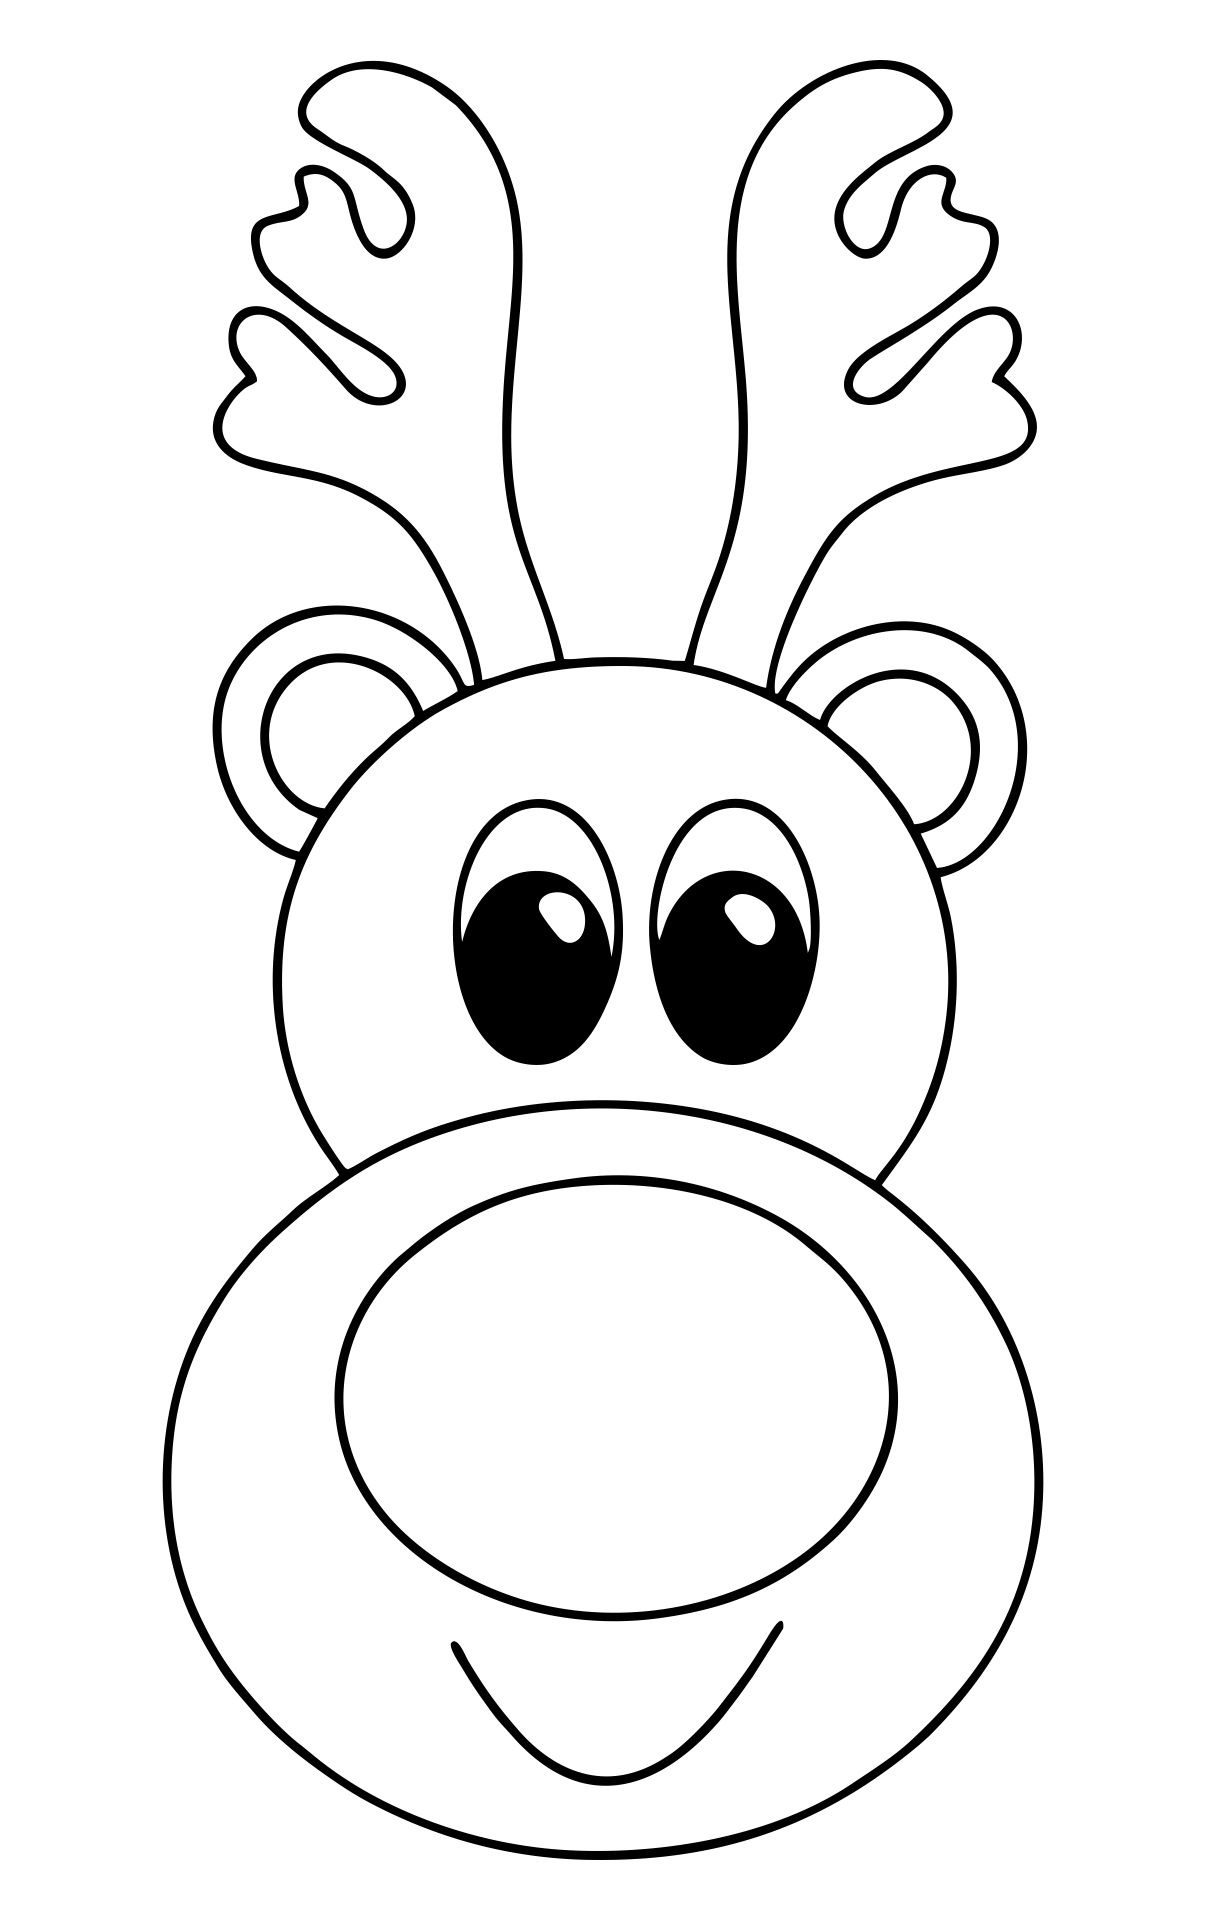 Reindeer face template printable reindeer face rudolph coloring pages reindeer printable